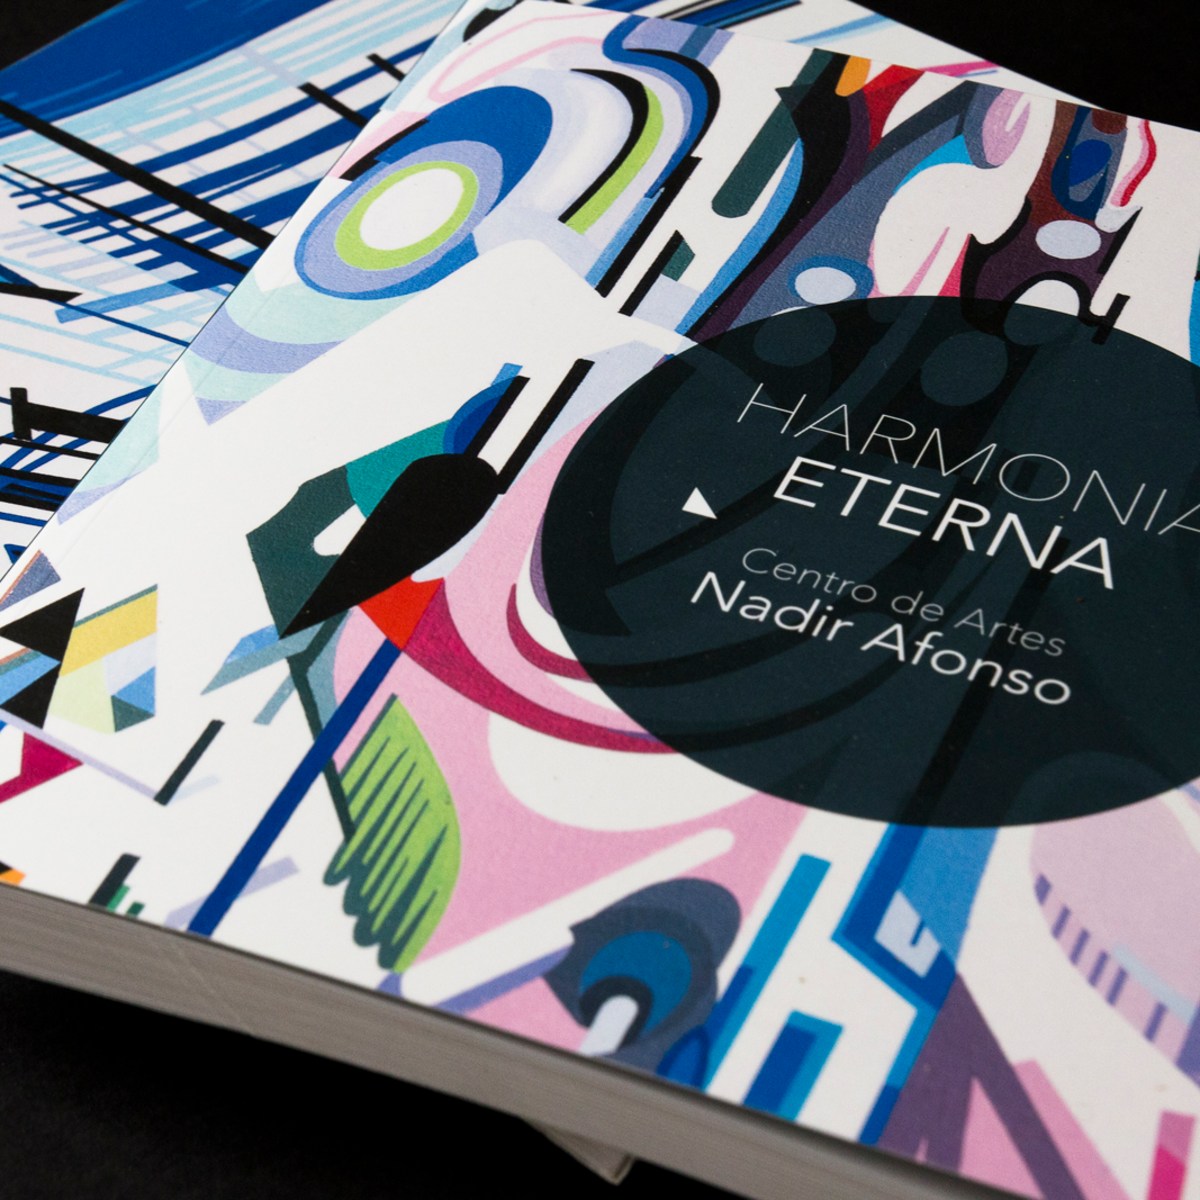 HARMONIA ETERNA, Nadir Afonso